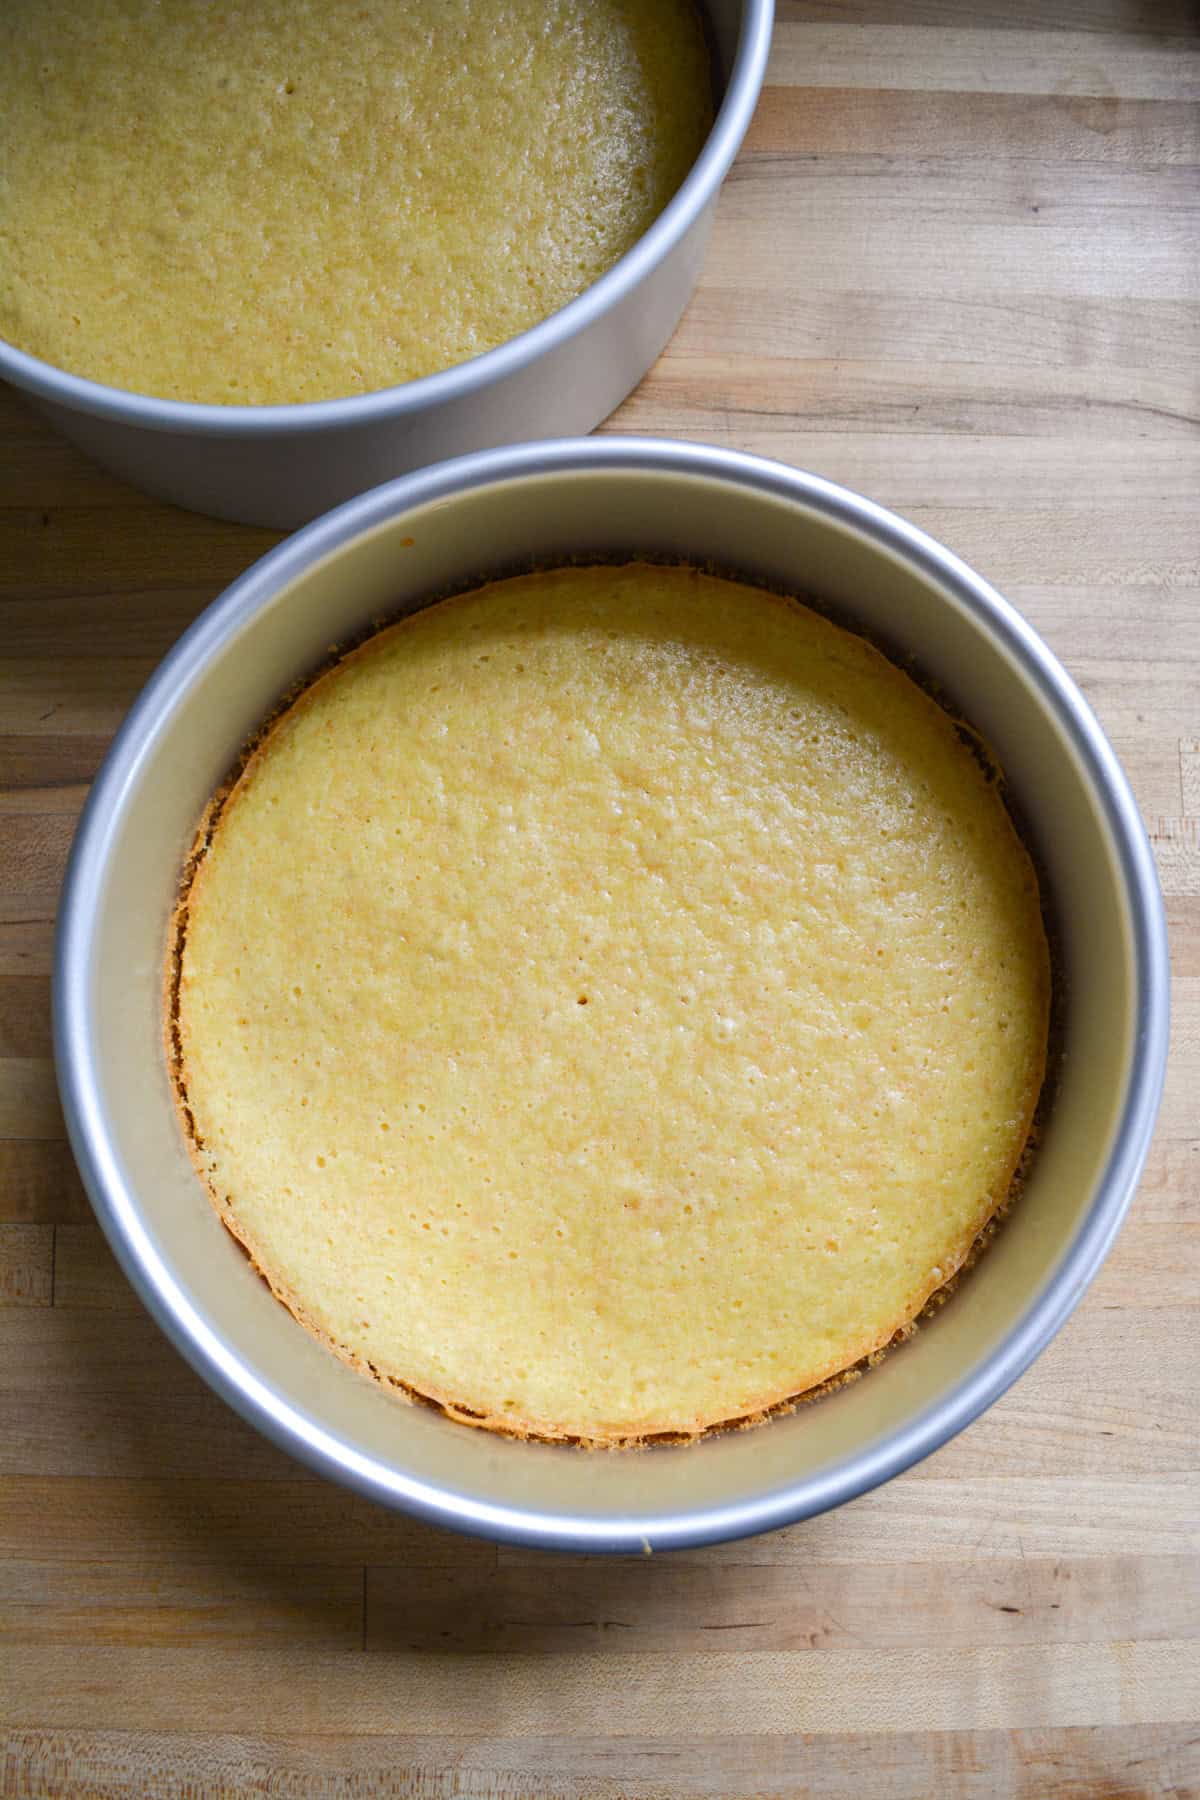 Baked vegan yellow cakes in their cake pans.